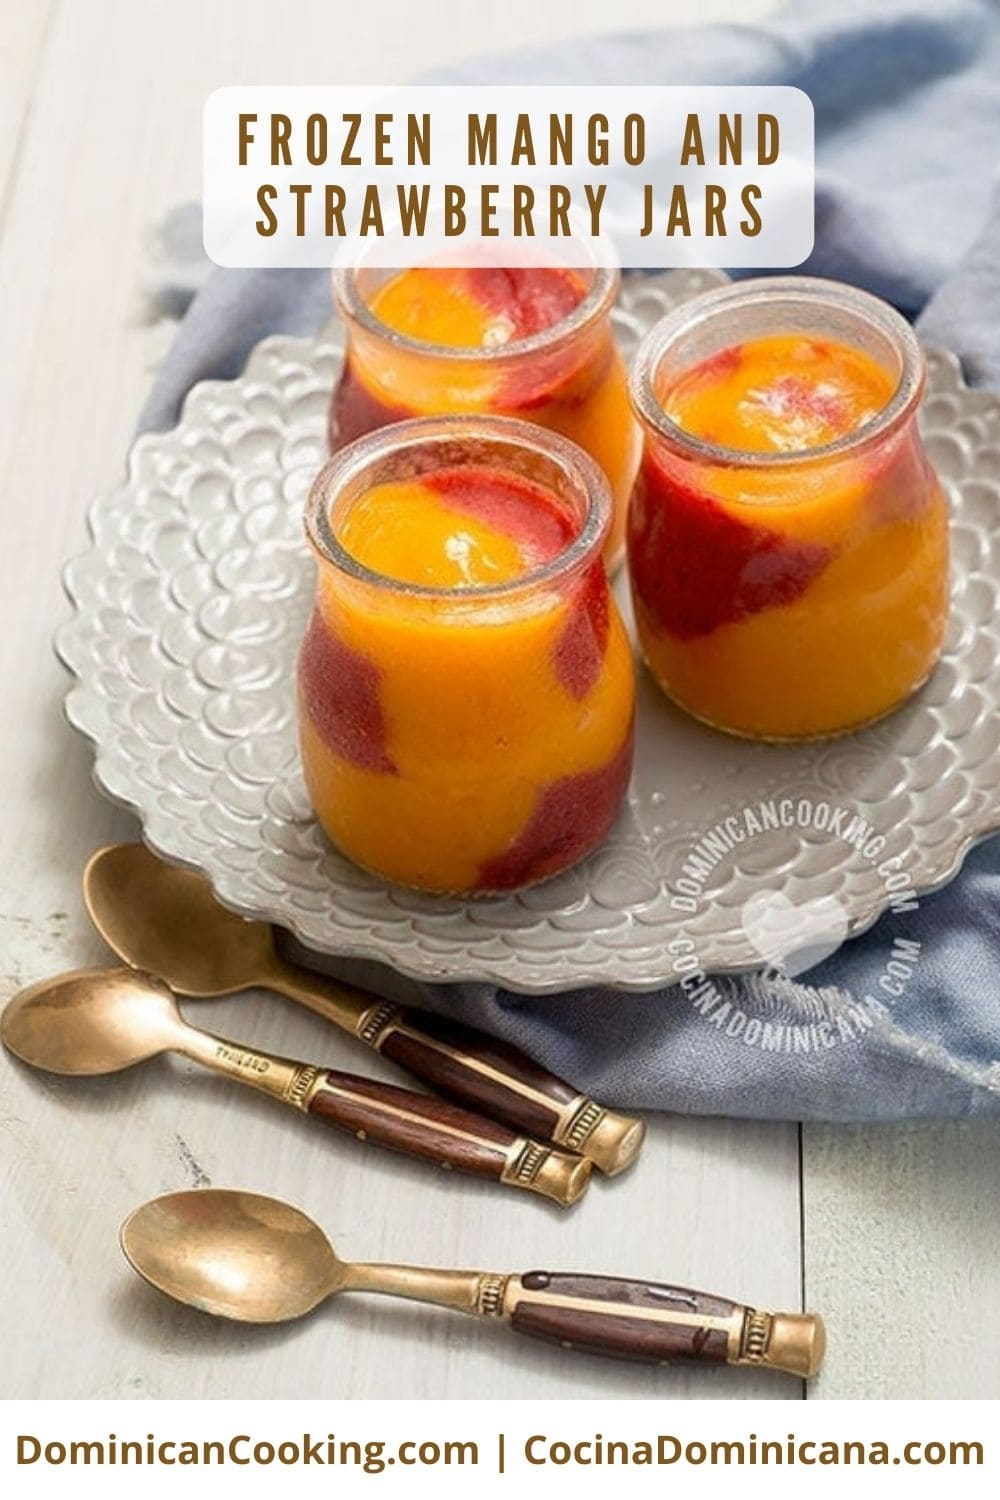 Frozen mango and strawberry jars recipe.